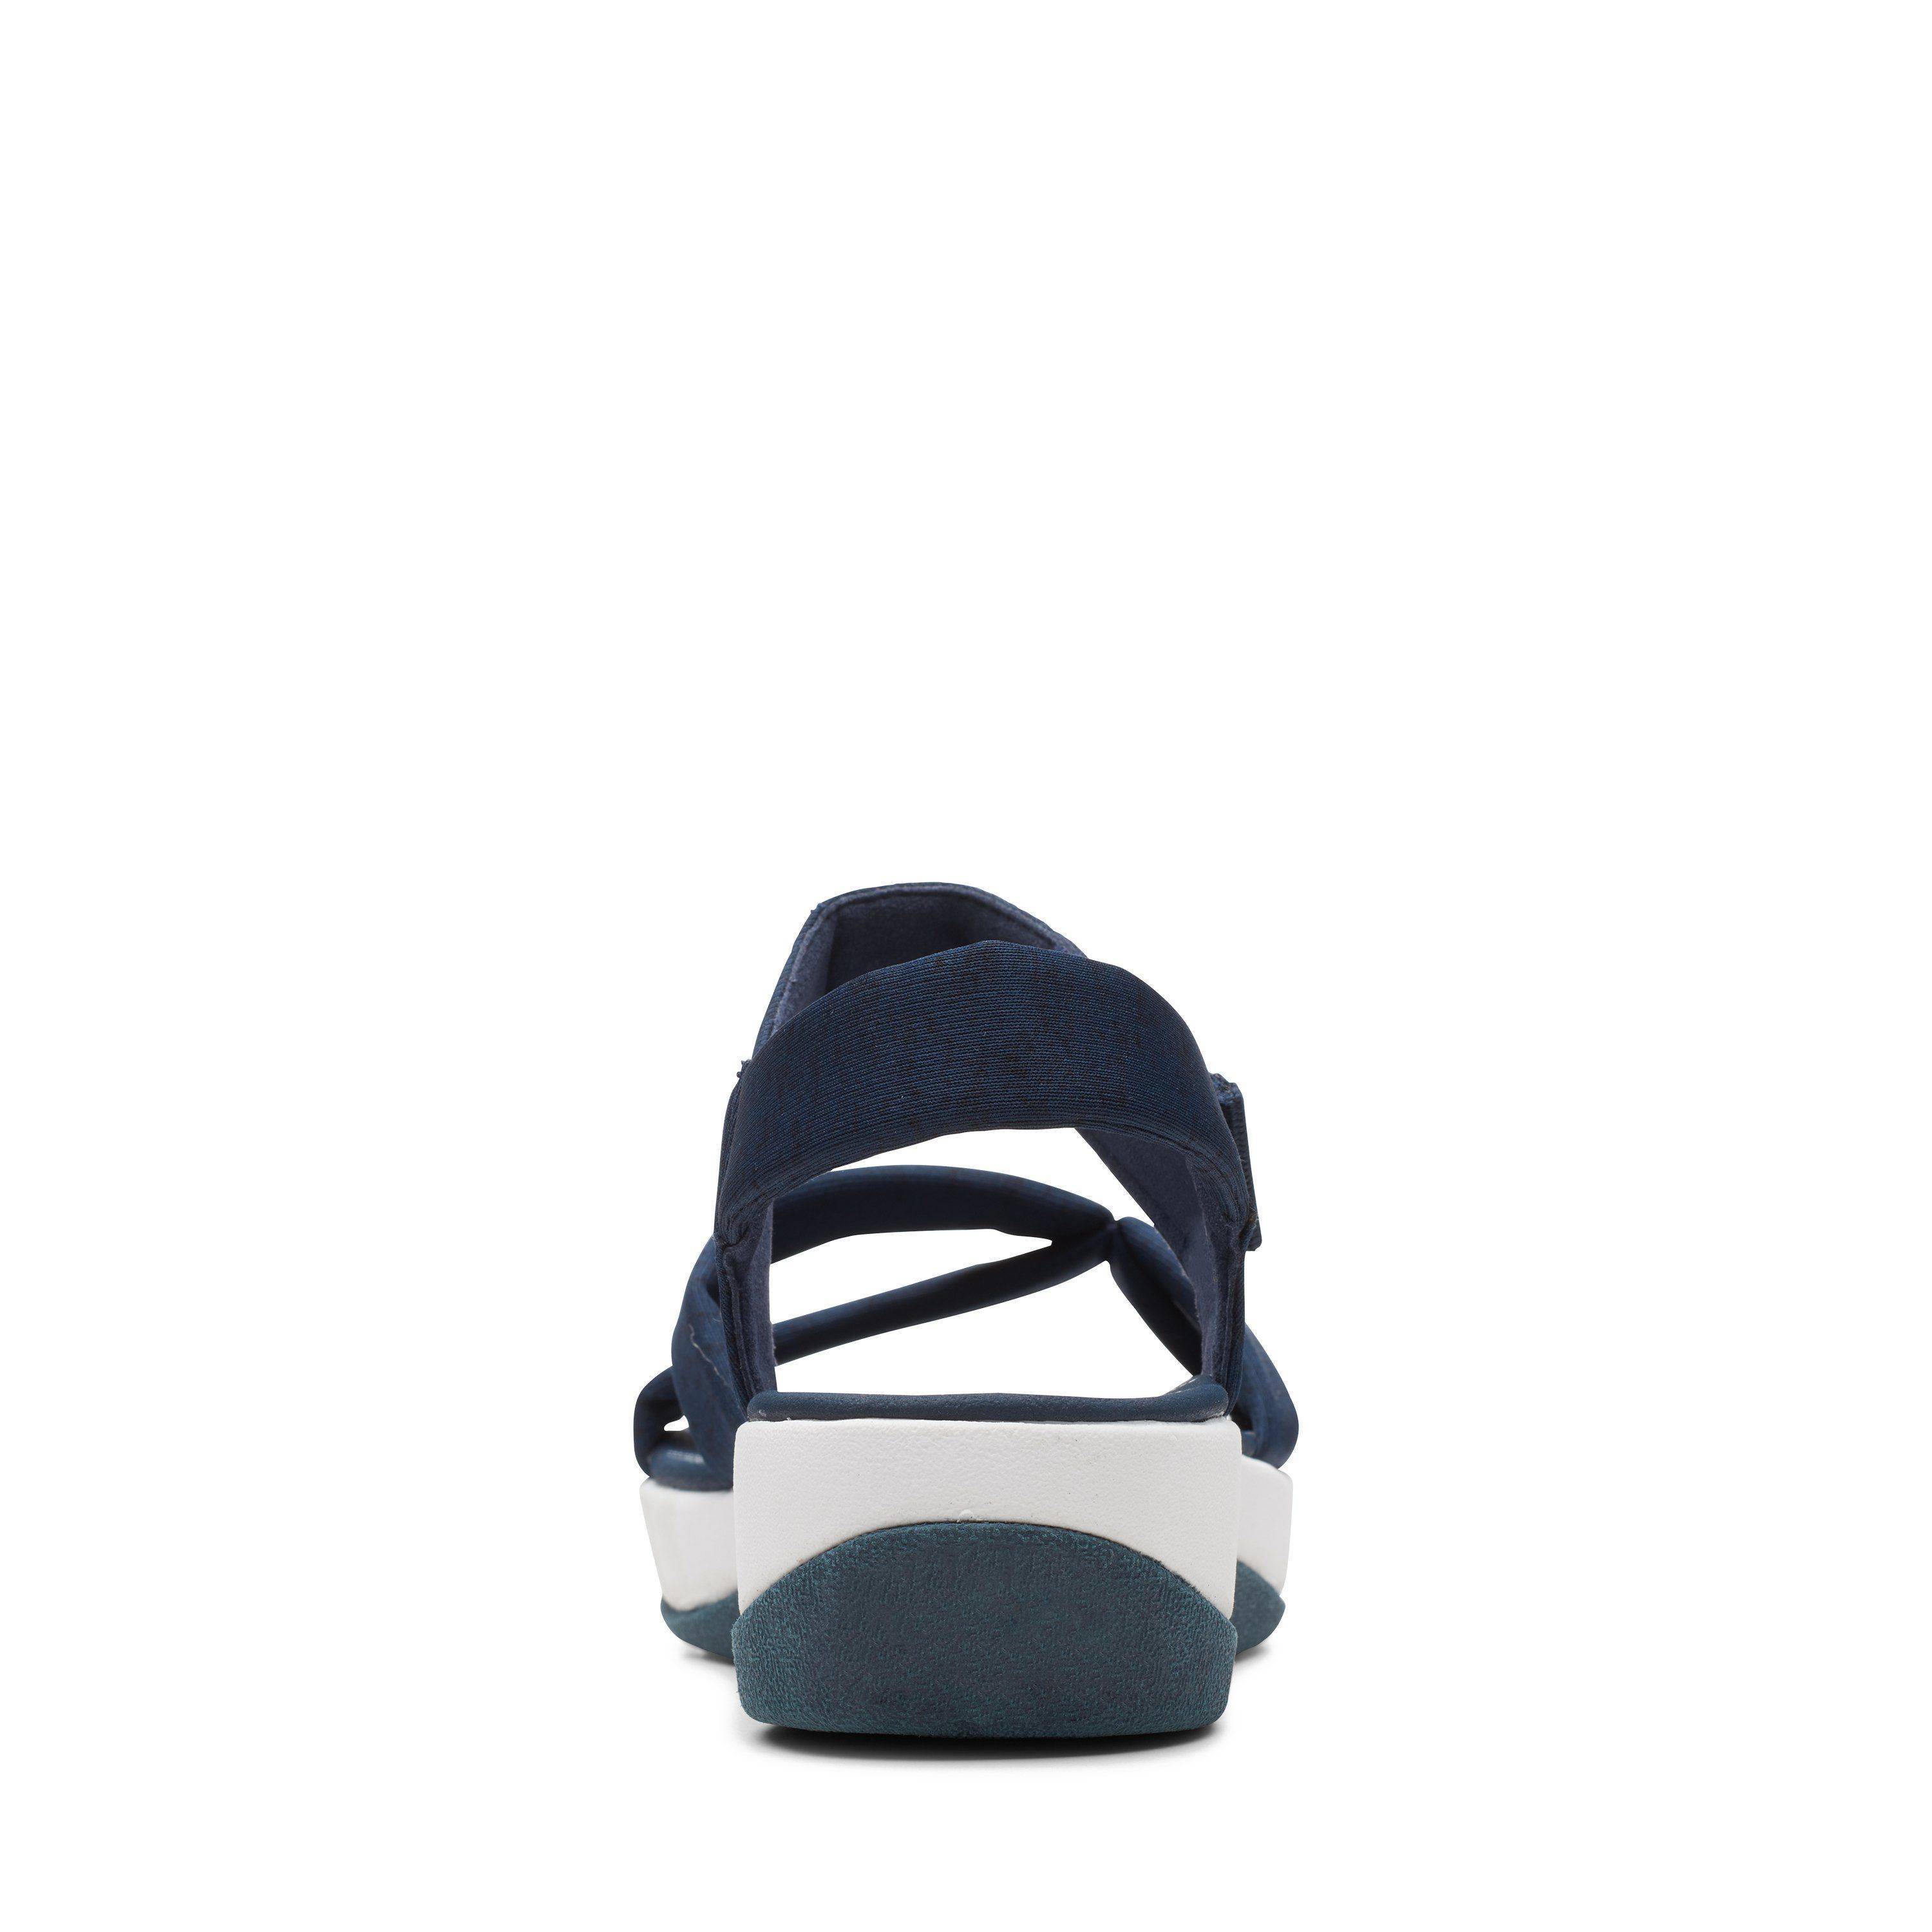 Женские сандалии Clarks, синие, цвет синий, размер 38 - фото 6